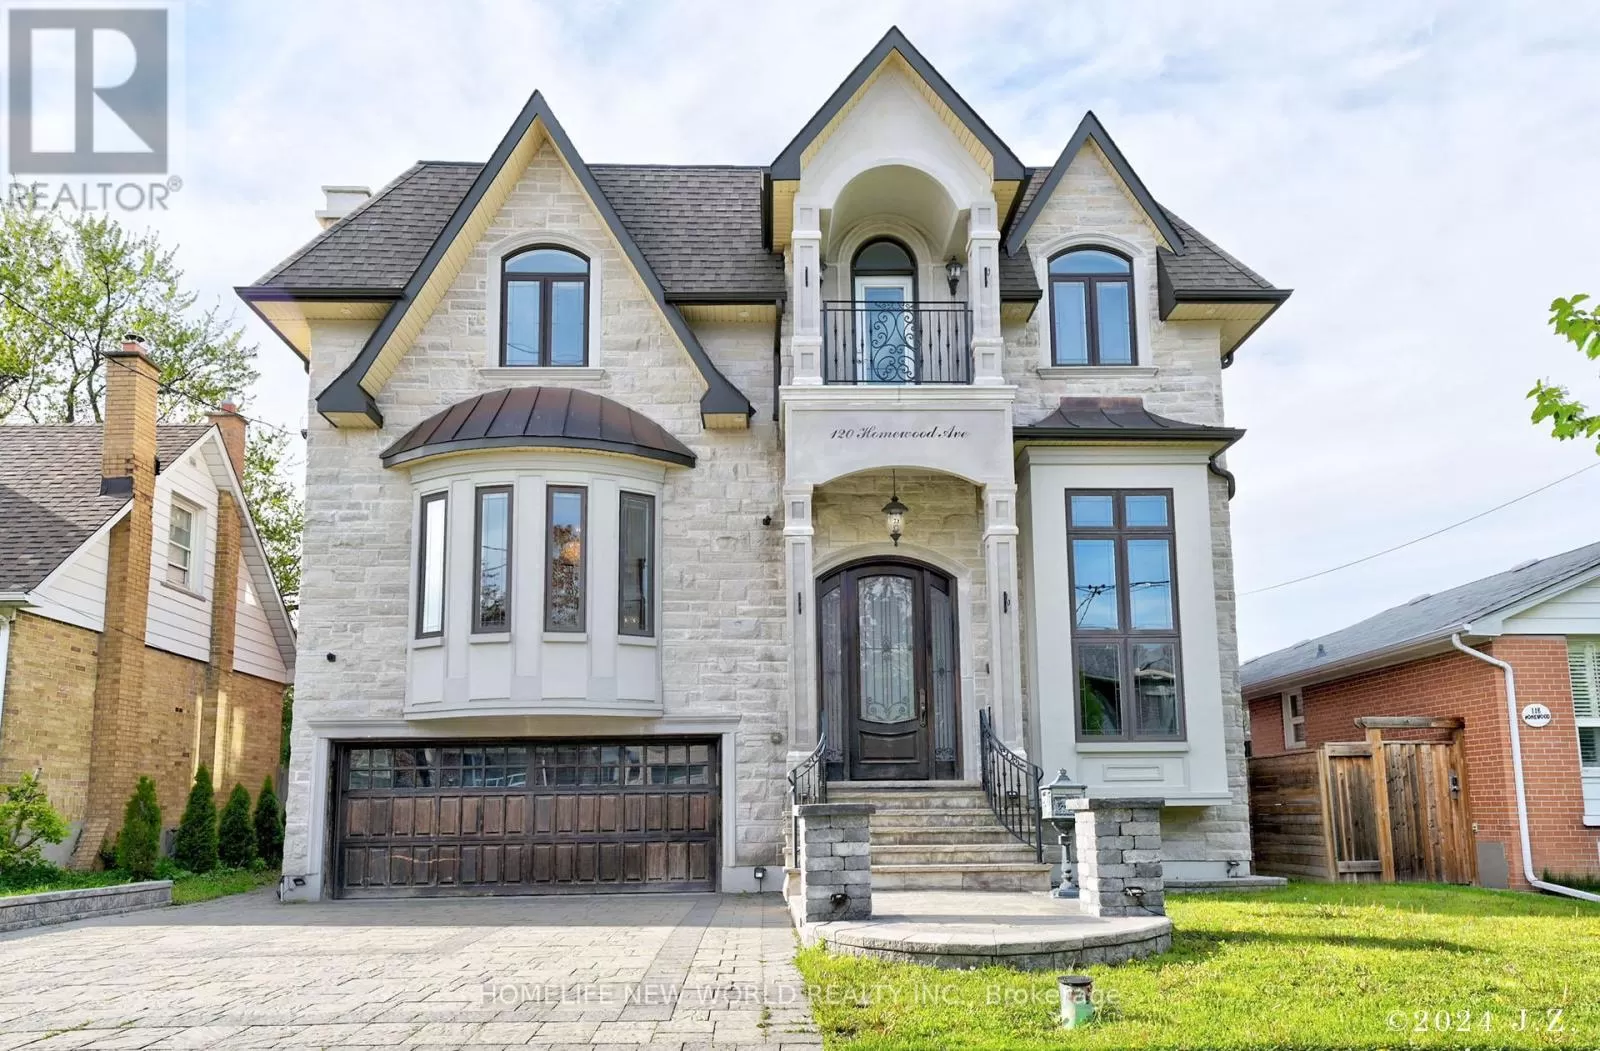 House for rent: 120 Homewood Avenue N, Toronto, Ontario M2M 1K3